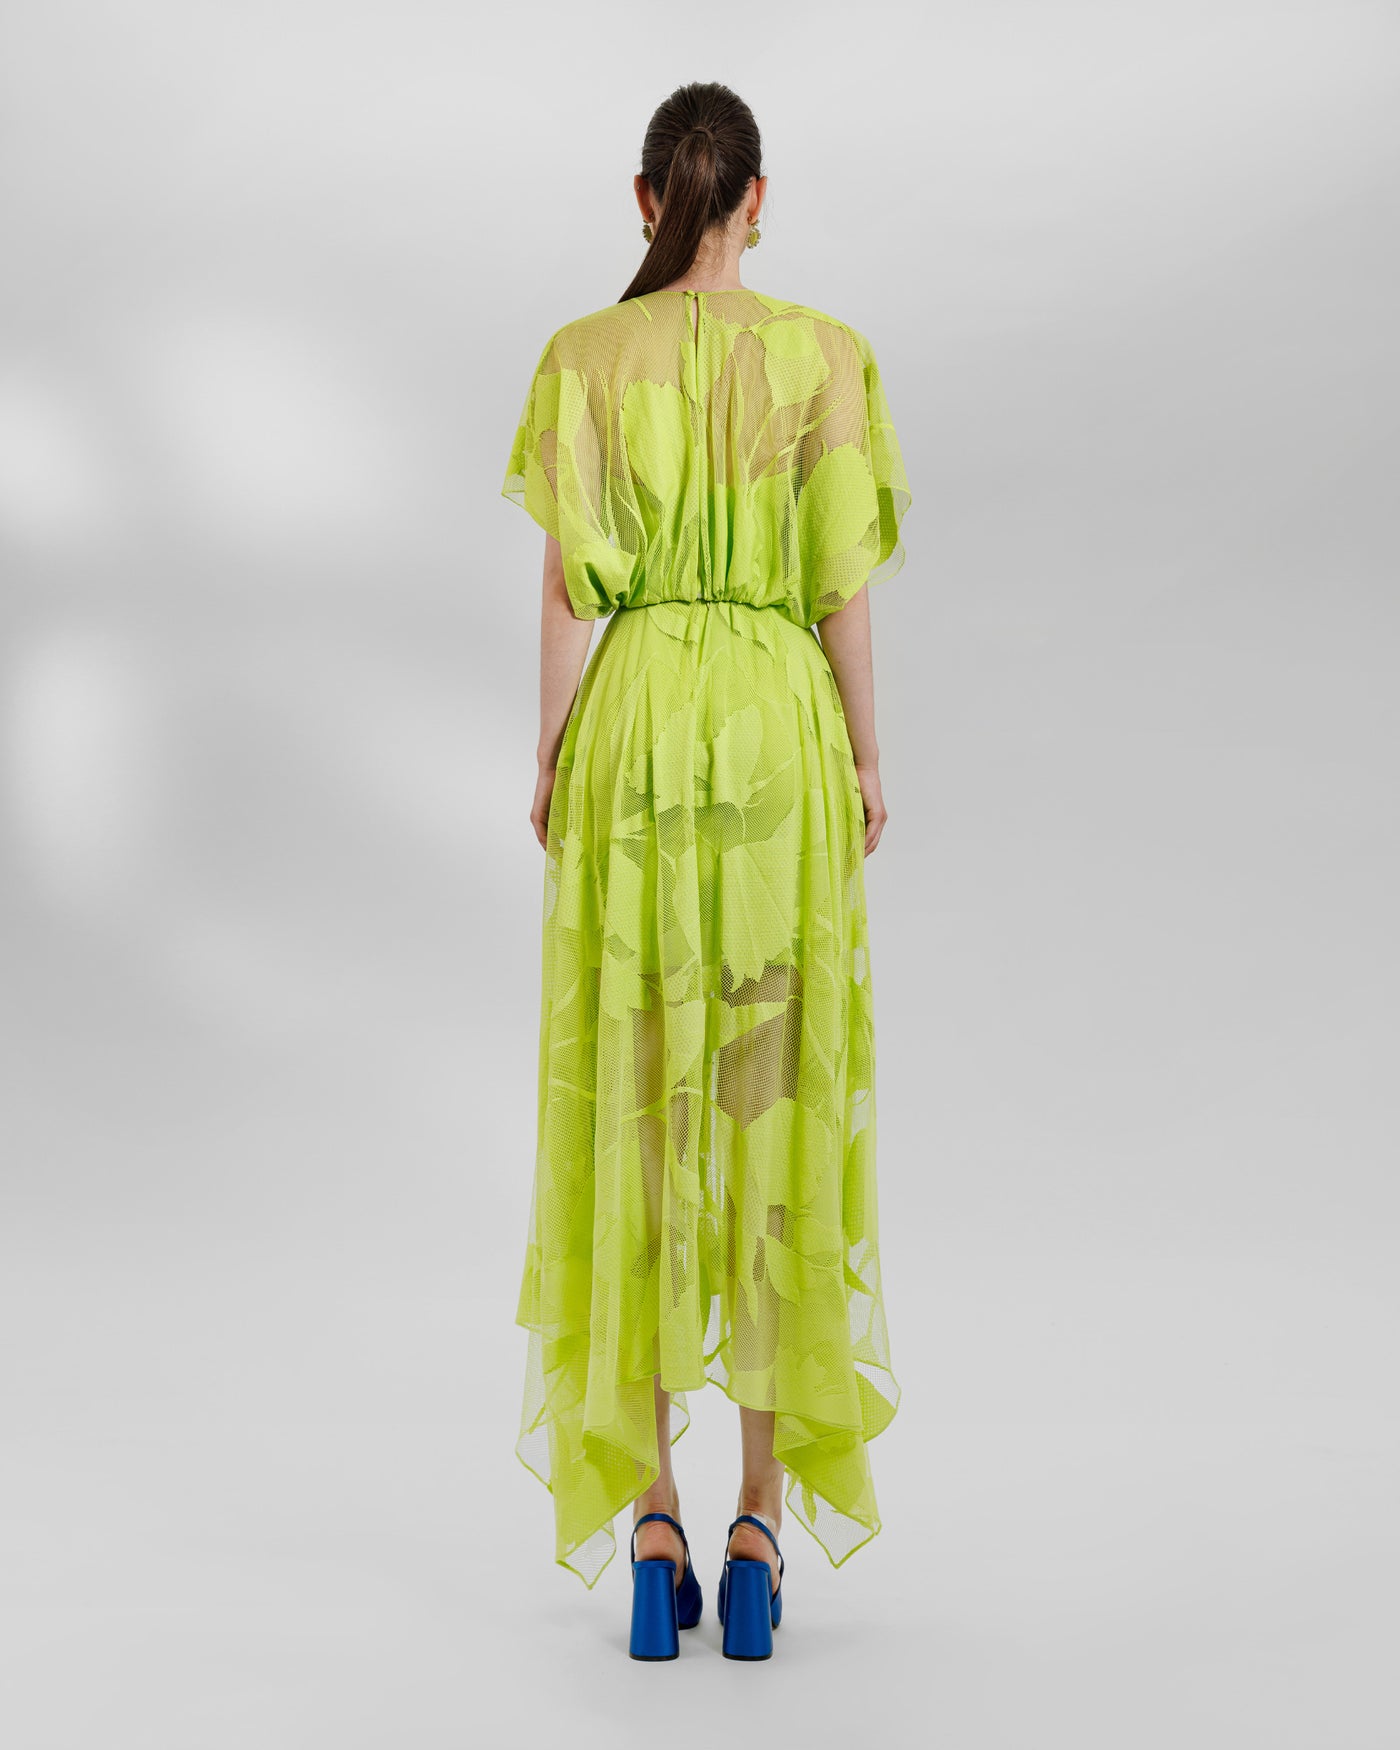 Patterned Lace Midi Dress